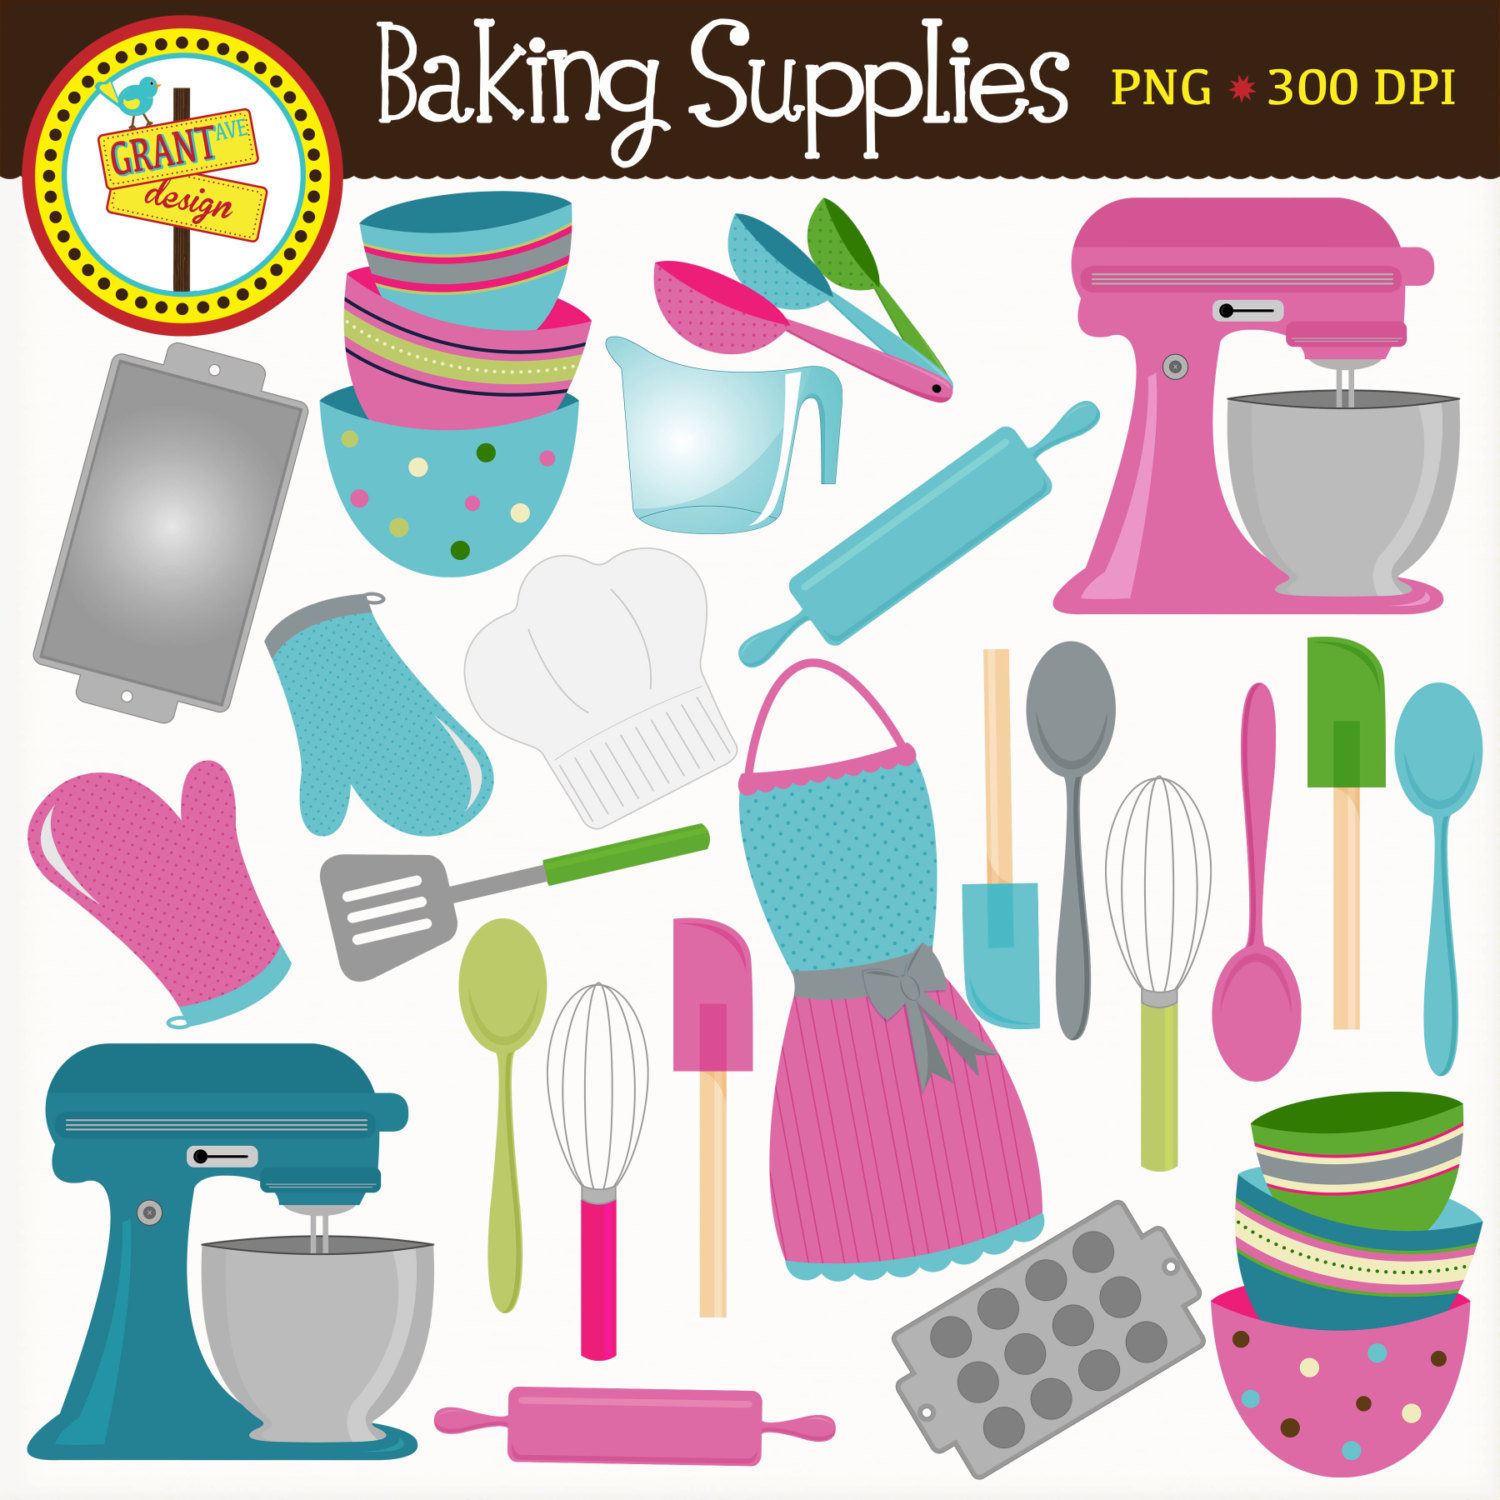 Baking Supplies Clipart Cute Baking Clip Art By Grantavenuedesign